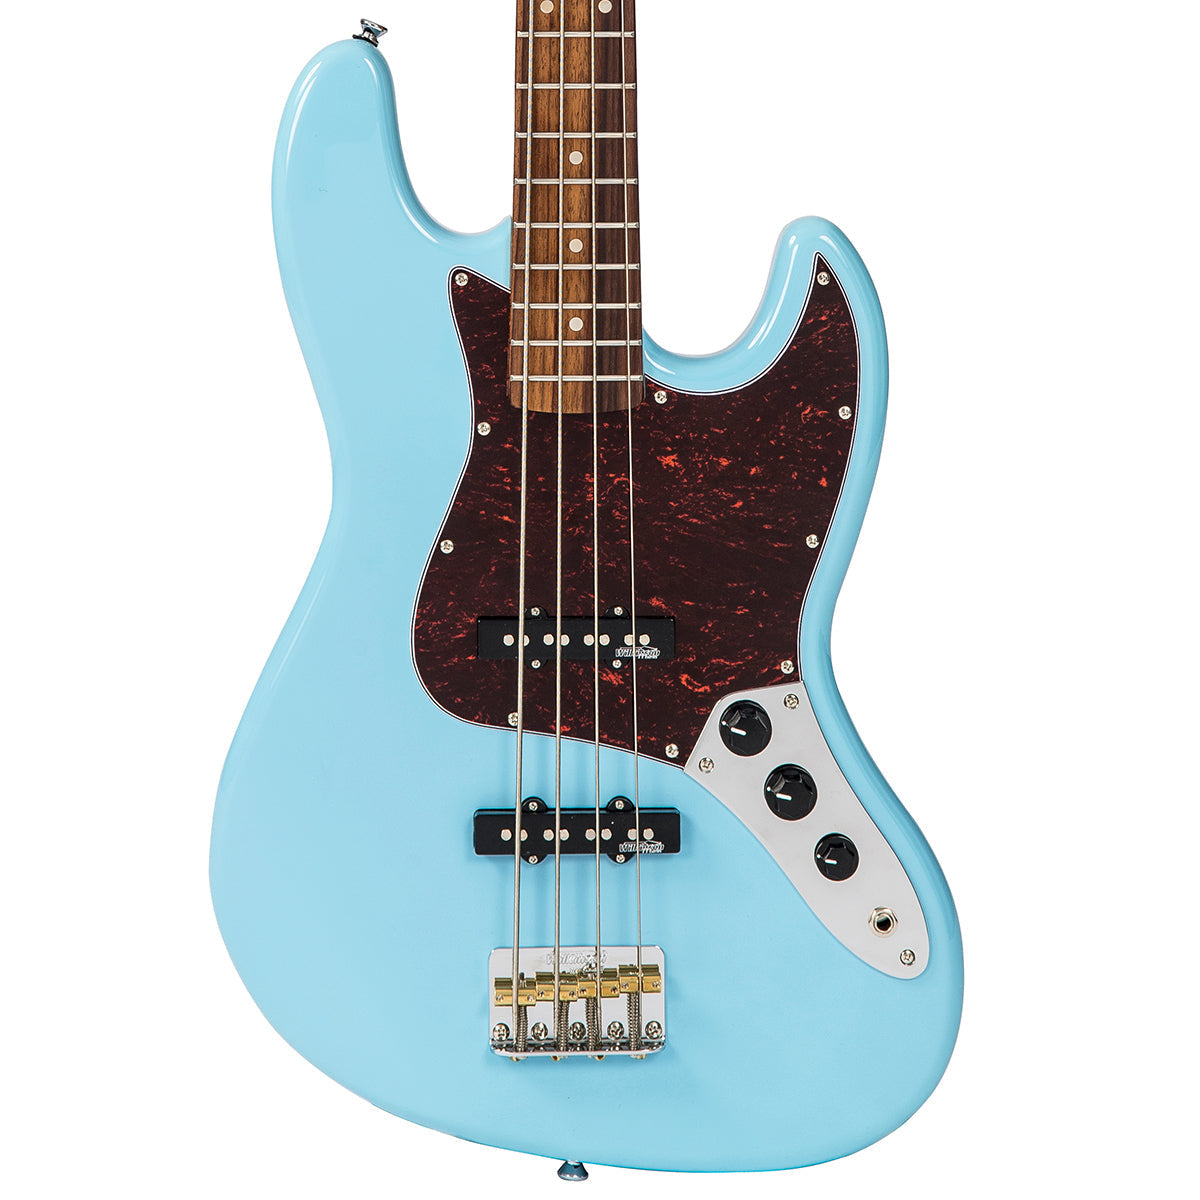 Vintage VJ74 ReIssued Bass ~ Laguna Blue, Bass Guitar for sale at Richards Guitars.